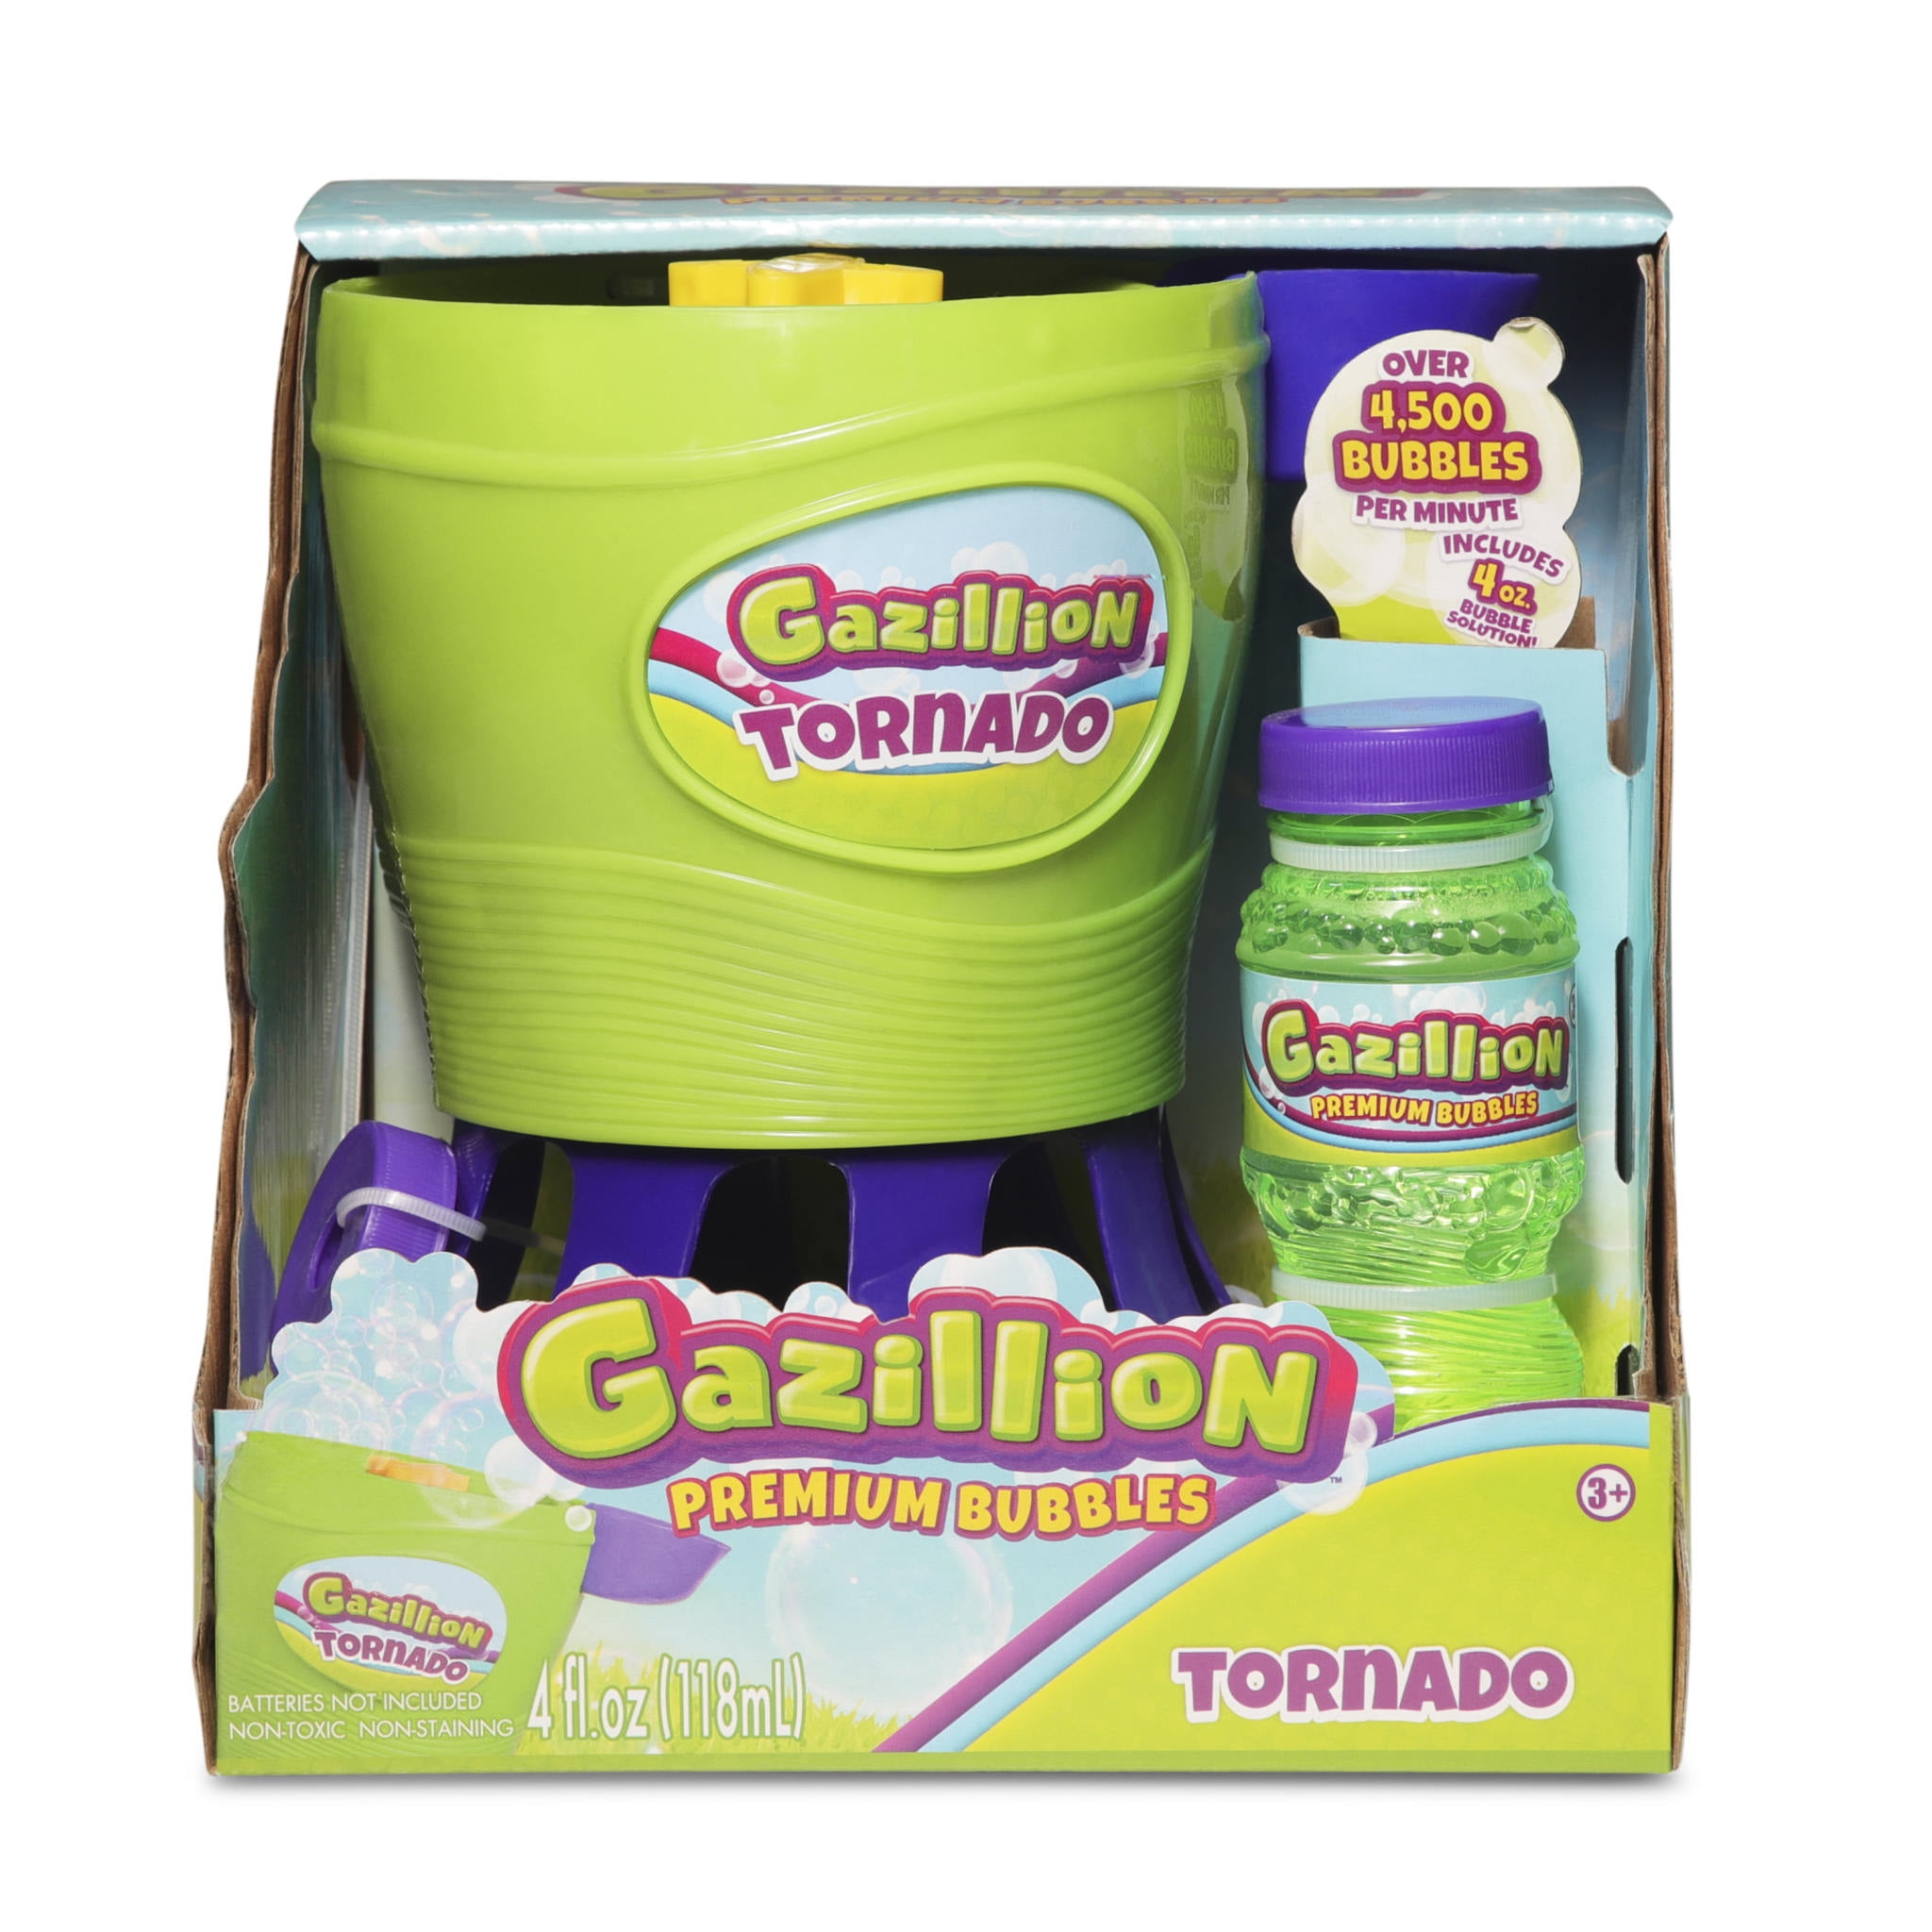 Gazillion Bubbles Tornado Machine Bubble Blaster Ultimate Blower Kids for sale online 